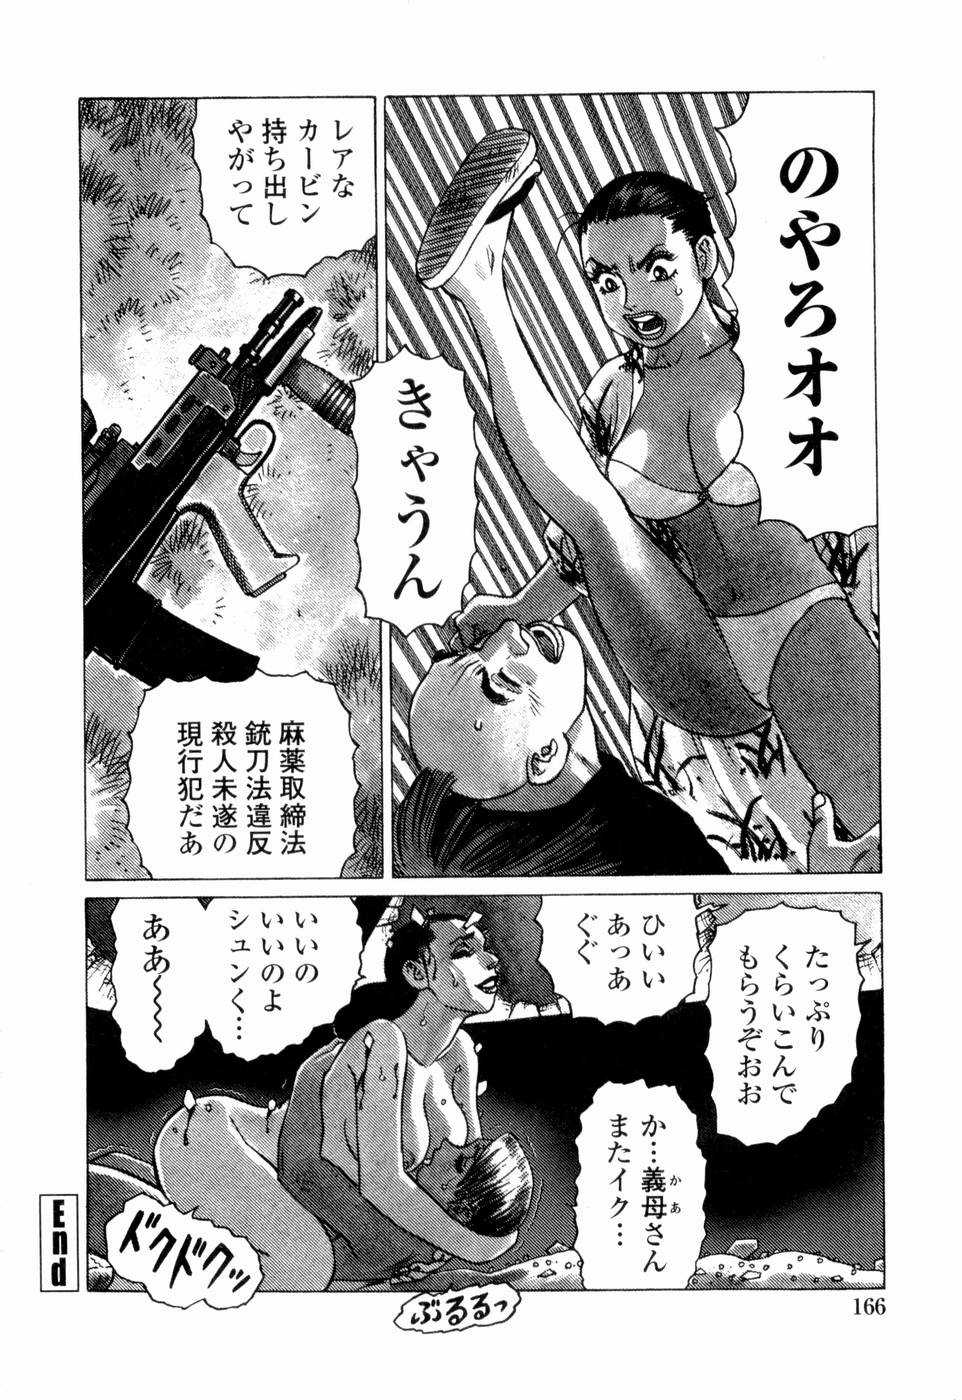 [Yamamoto Atsuji] Ammo Vol 4 